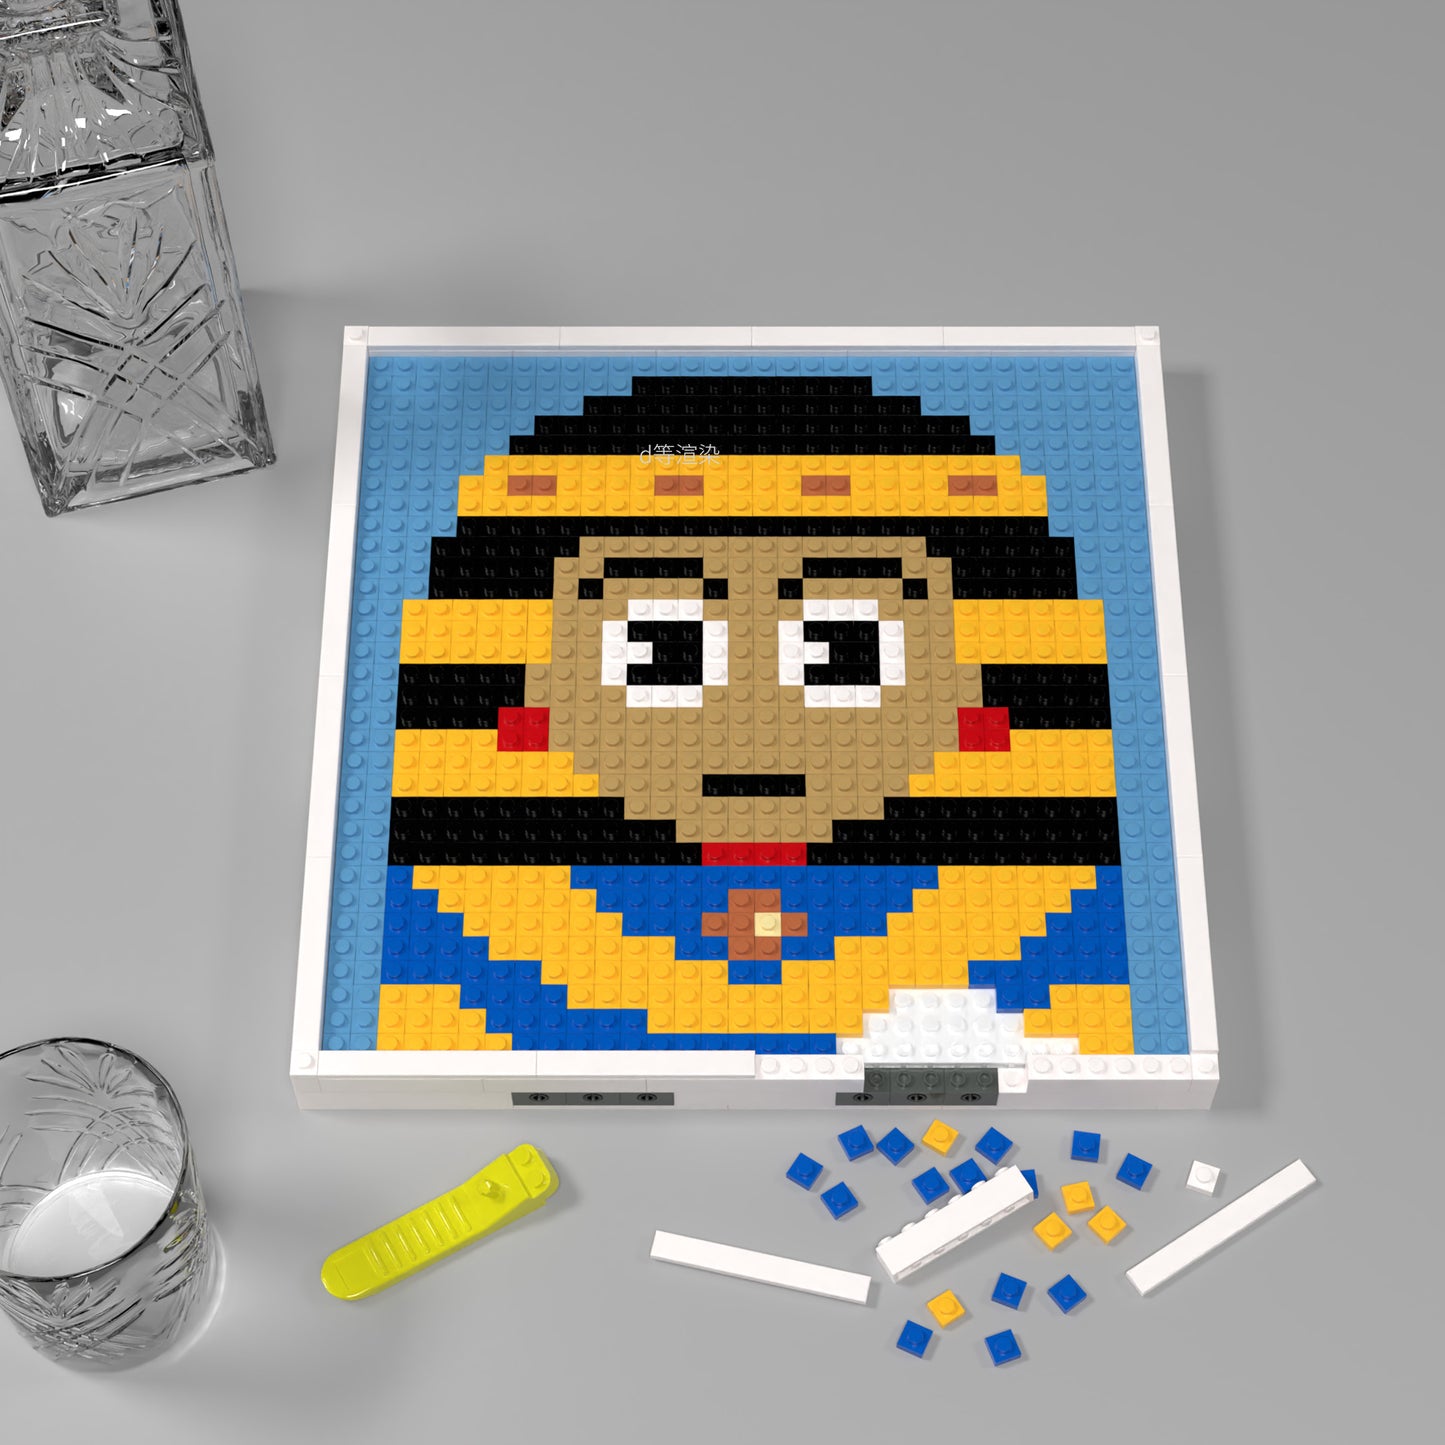 32*32 Compatible Lego Pieces "Egyptian Queen" Pixel Art